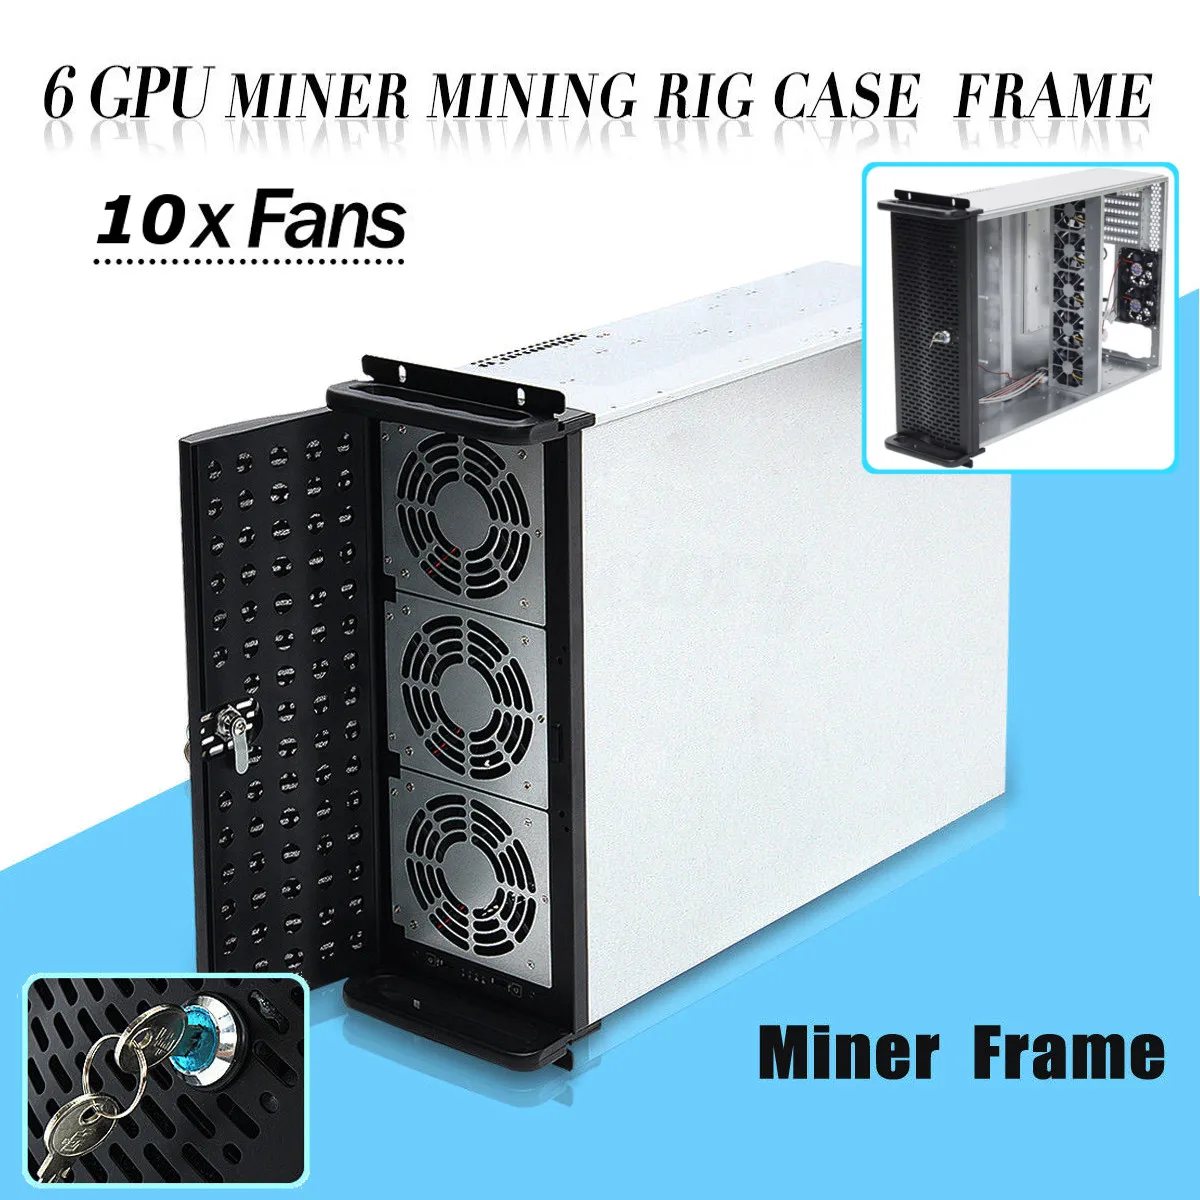 6 GPU 4U Rackmount Miner Mining Frame чехол для горного сервера с 10 вентиляторами Rsiers Frame Rig